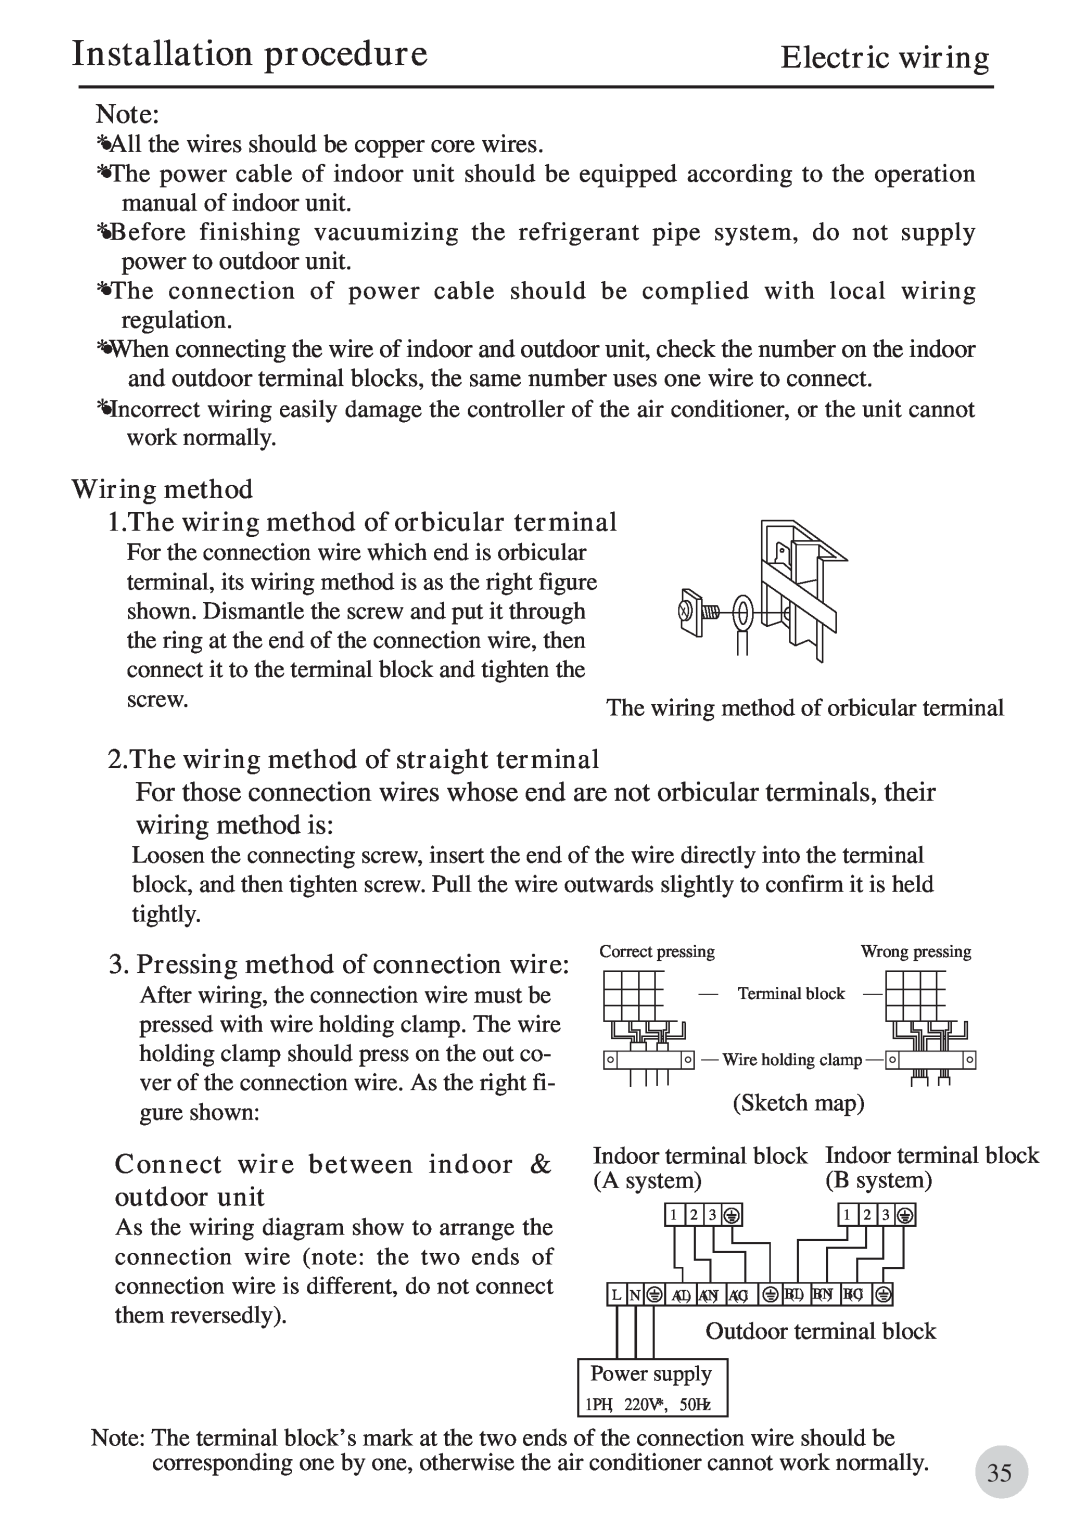 Haier 0010571570 manual Electric wiring, Installation procedure, Wiring method, The wiring method of orbicular terminal 